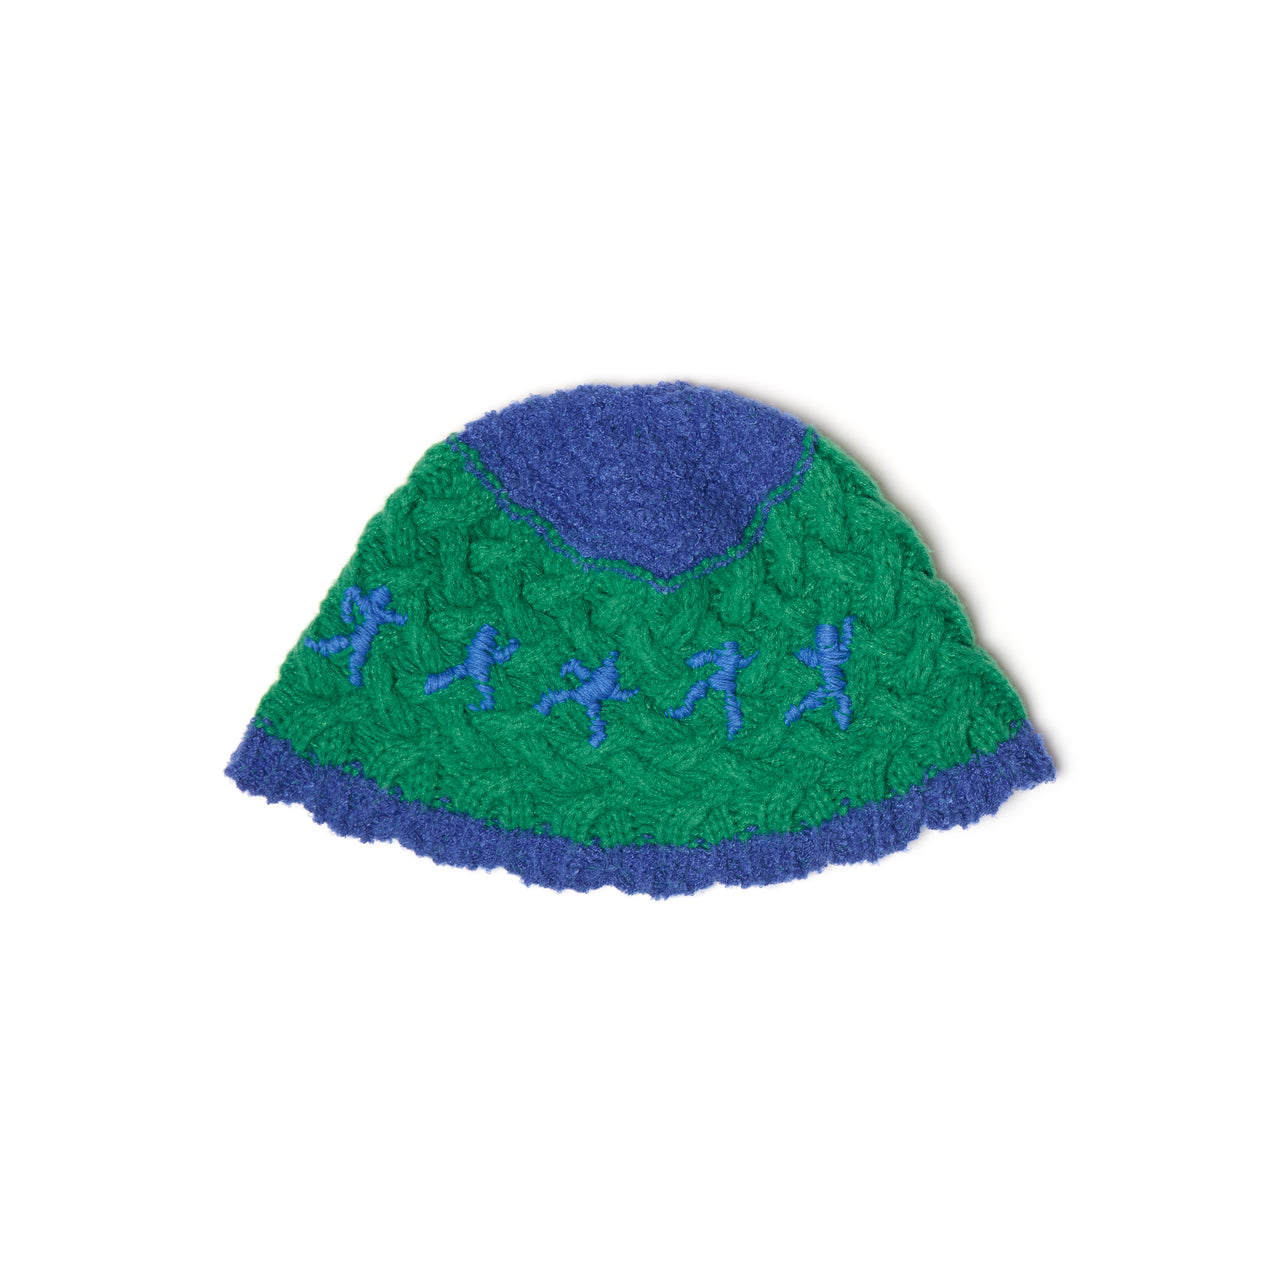 Running Man Crochet Hat [Green/Blue]